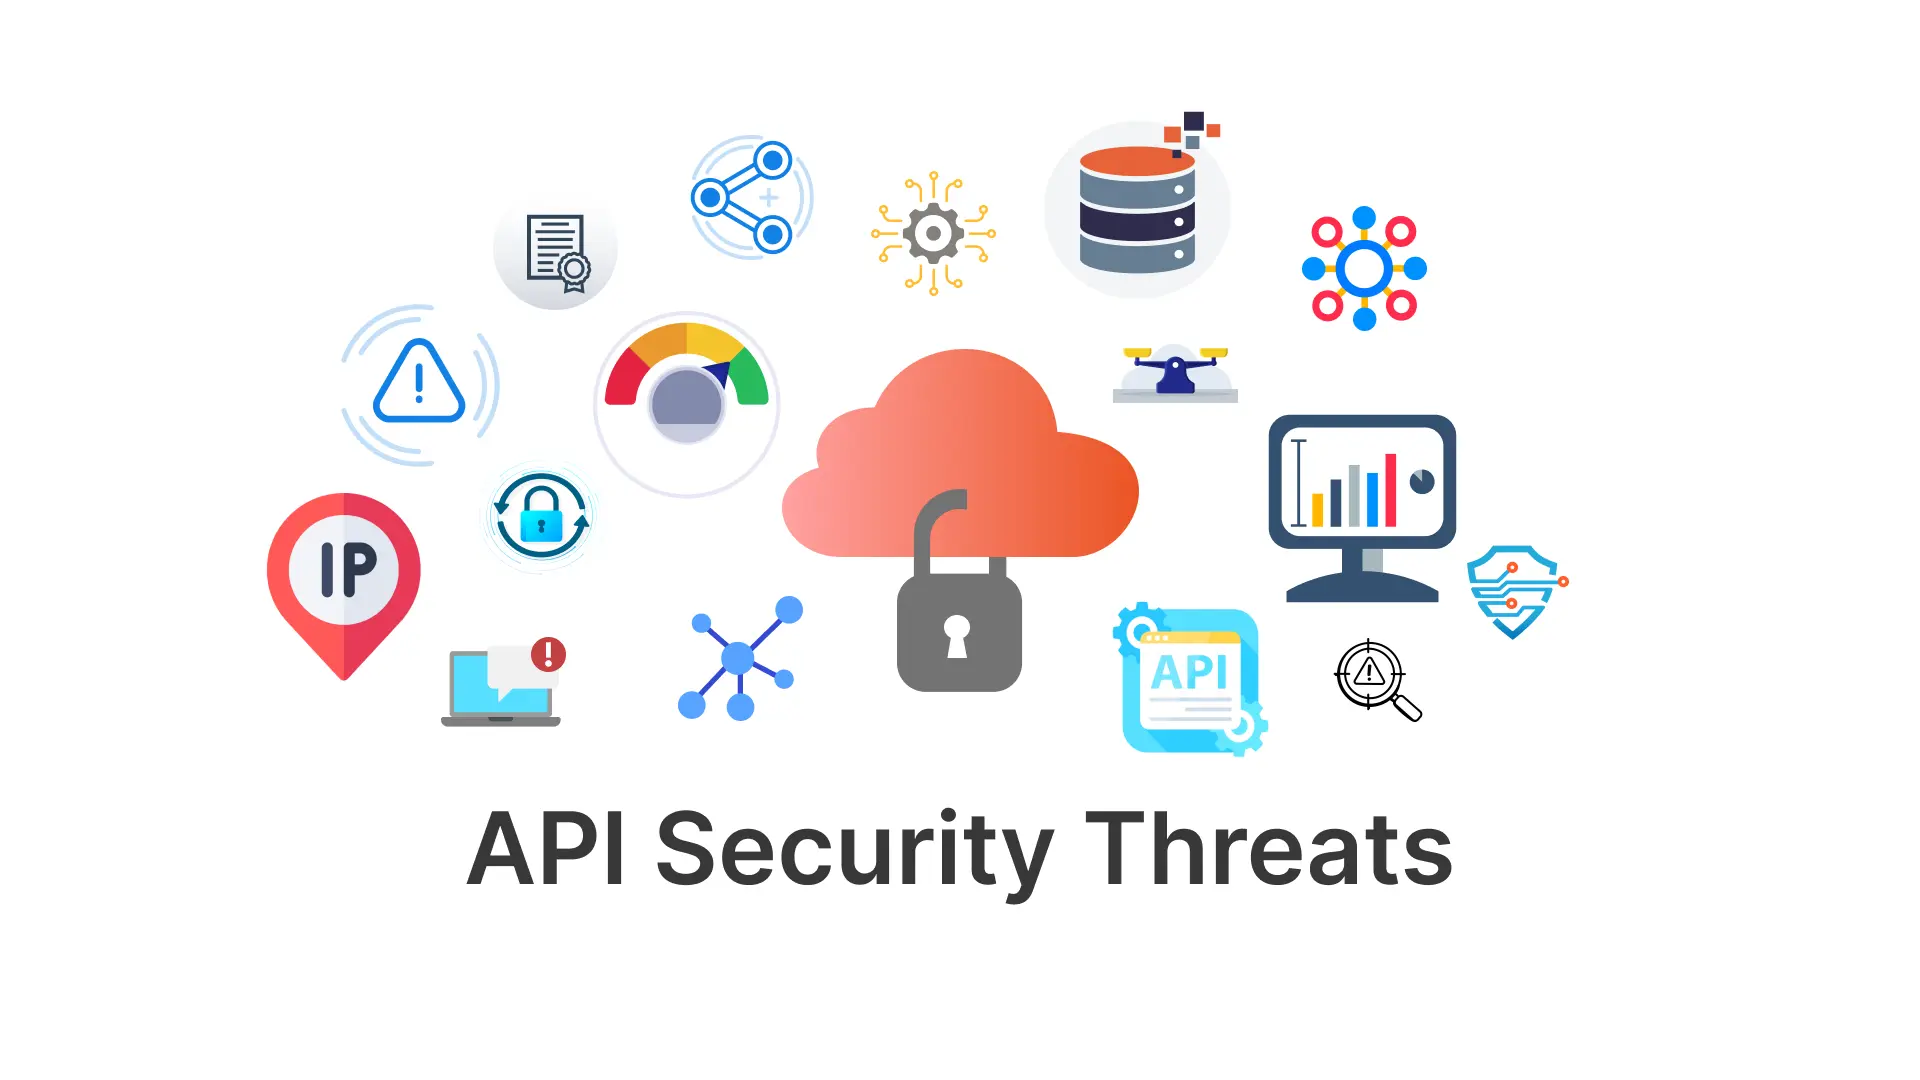 Comparing 2019 and 2023 OWASP Top 10 API Security Risks